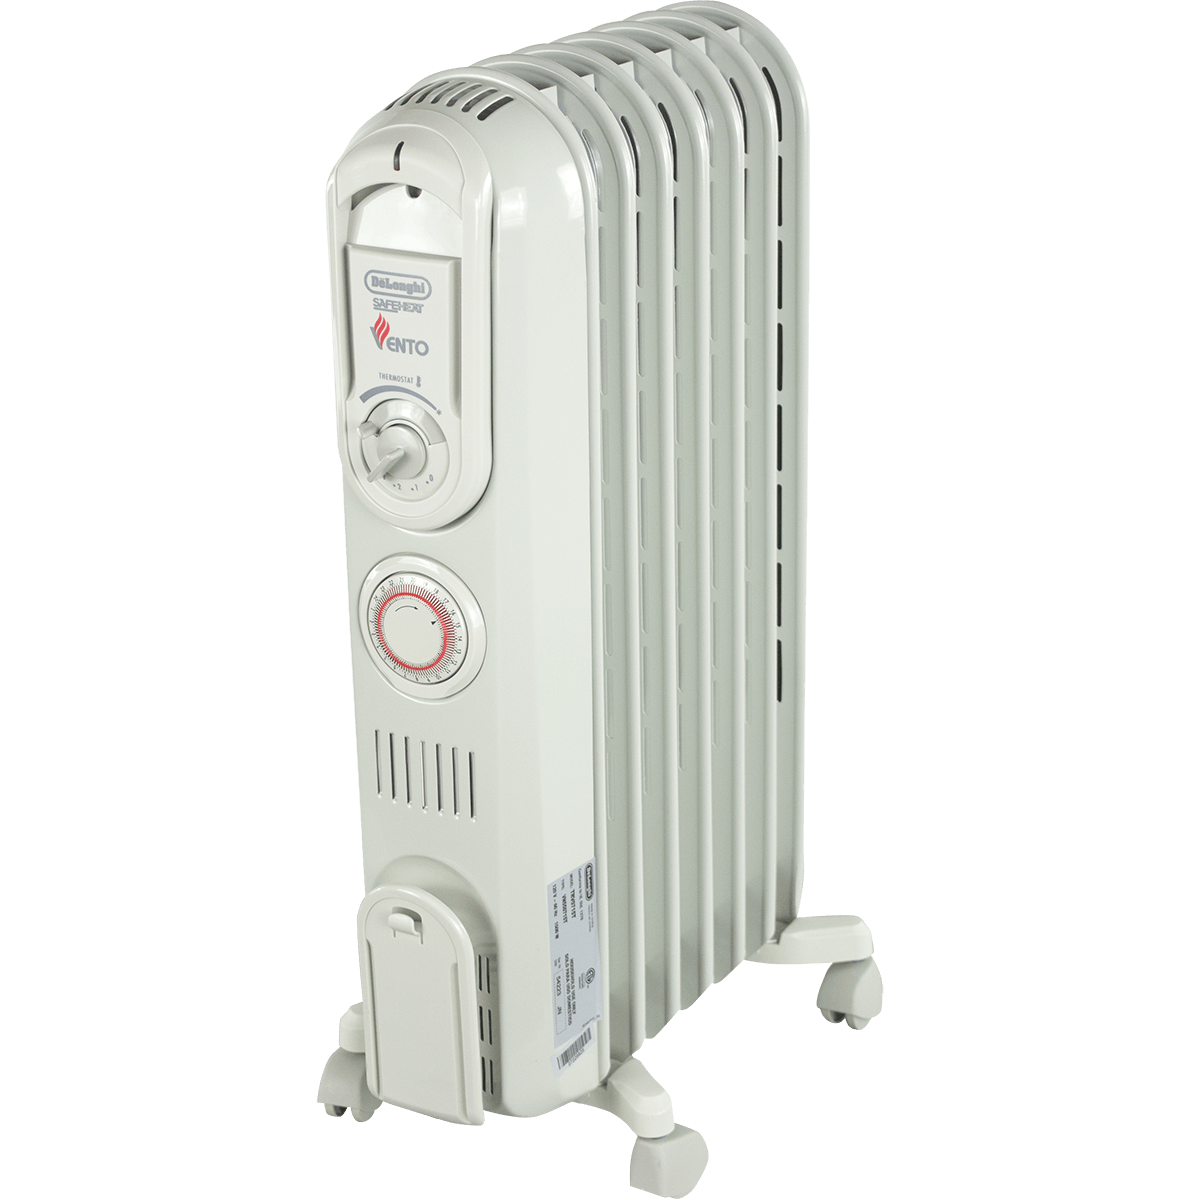 Delonghi oil filled radiator heater user manual pdf